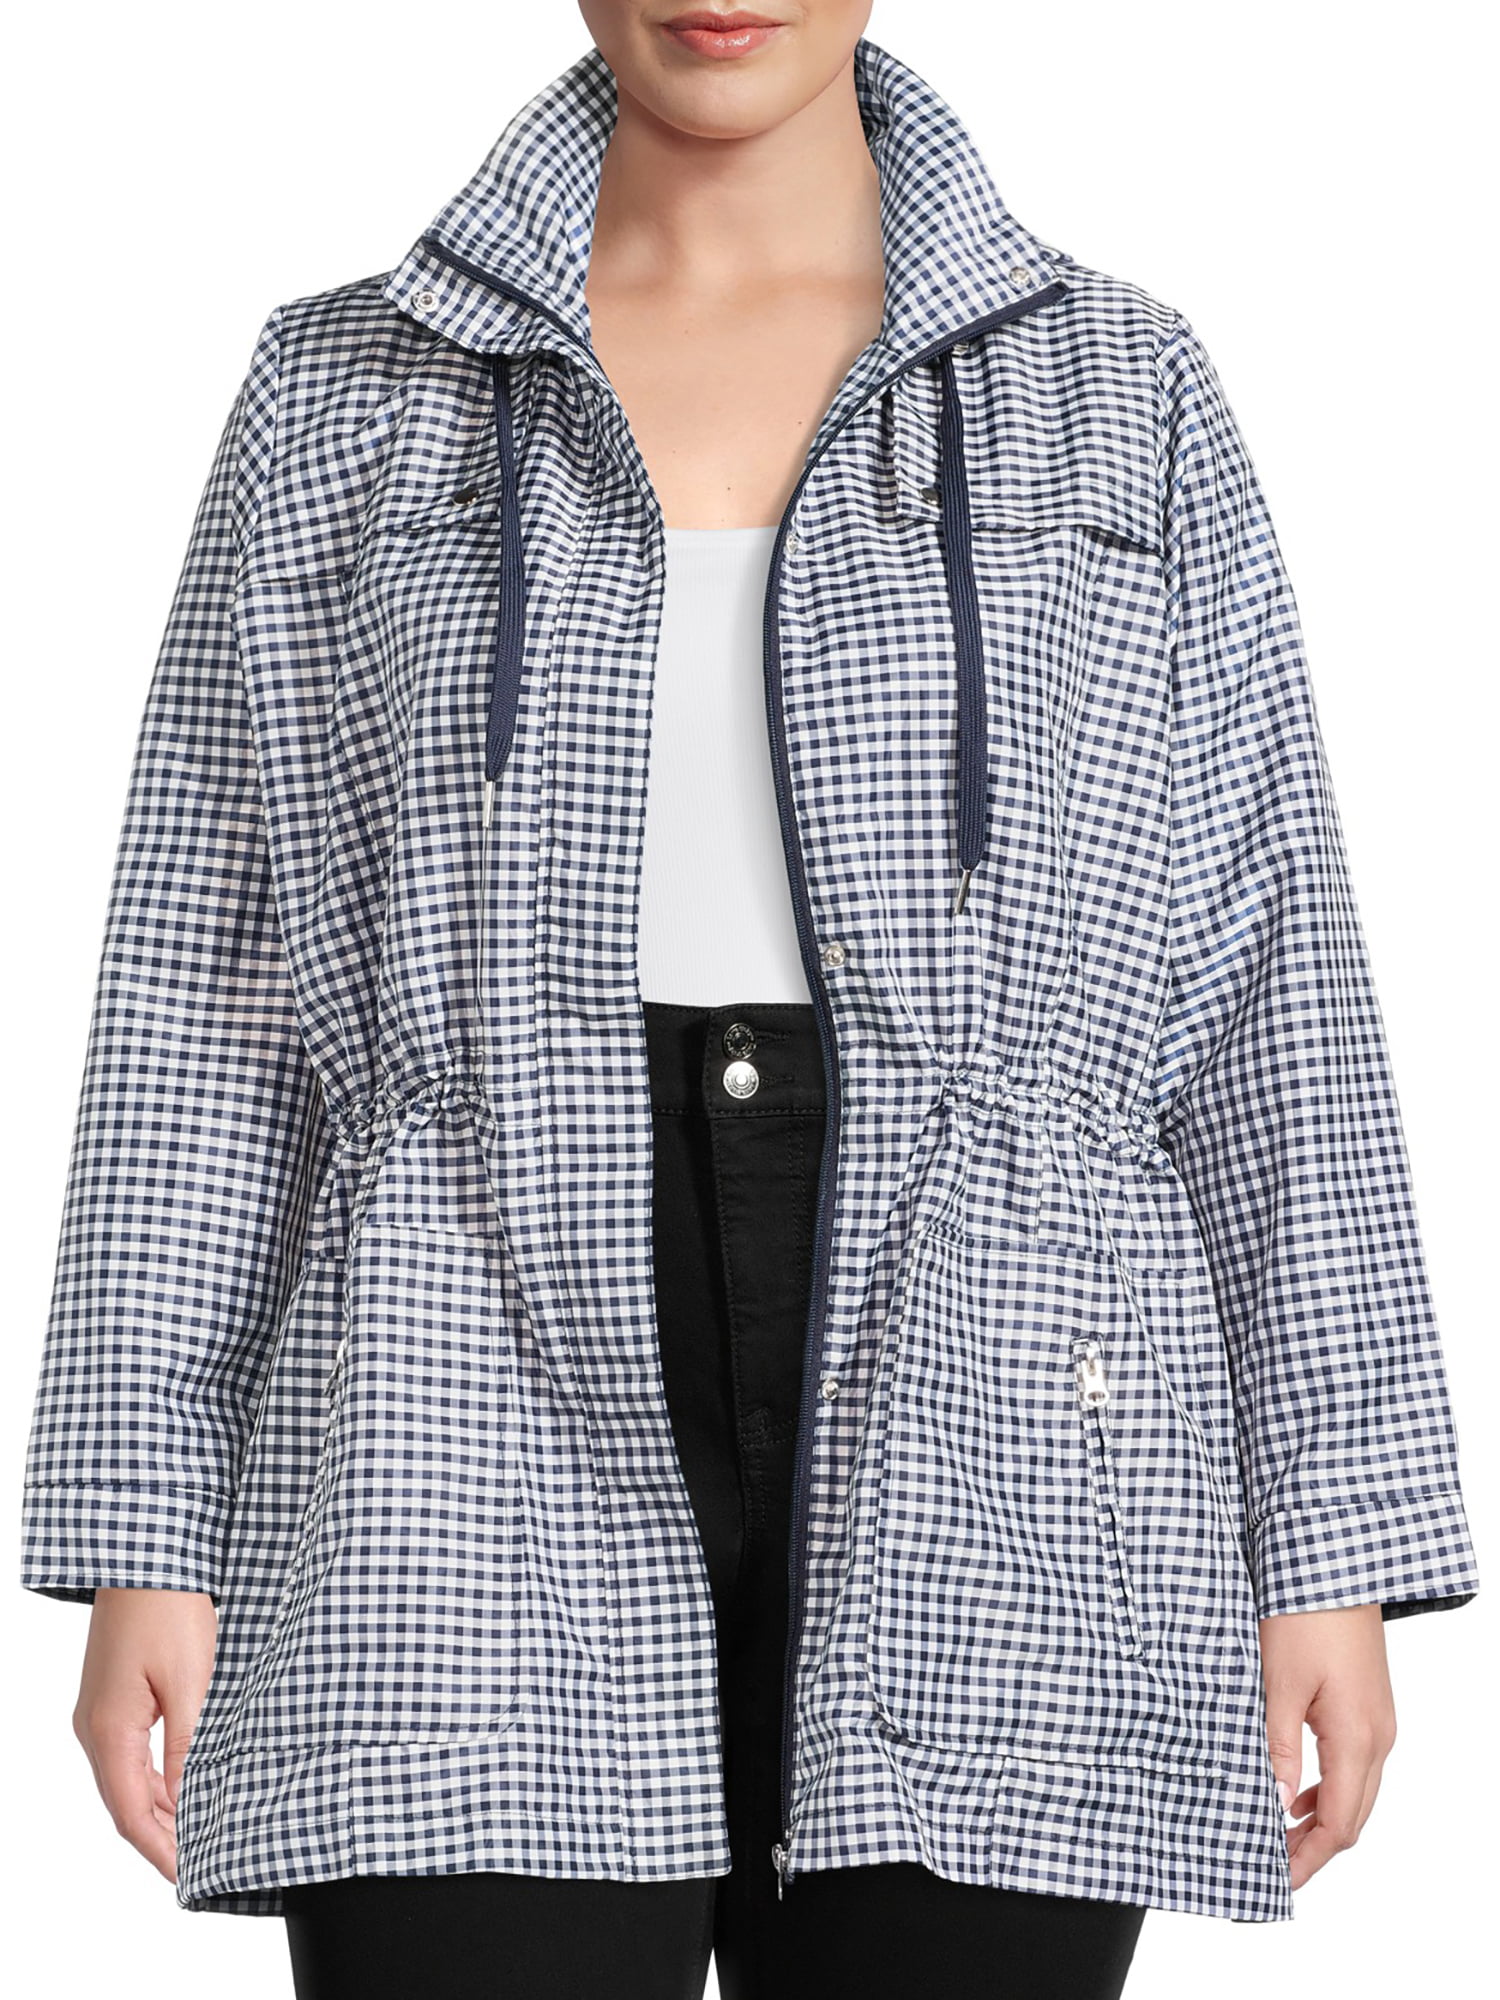 Me Jane Women's Plus Size Gingham Rain Jacket with Hood - Walmart.com